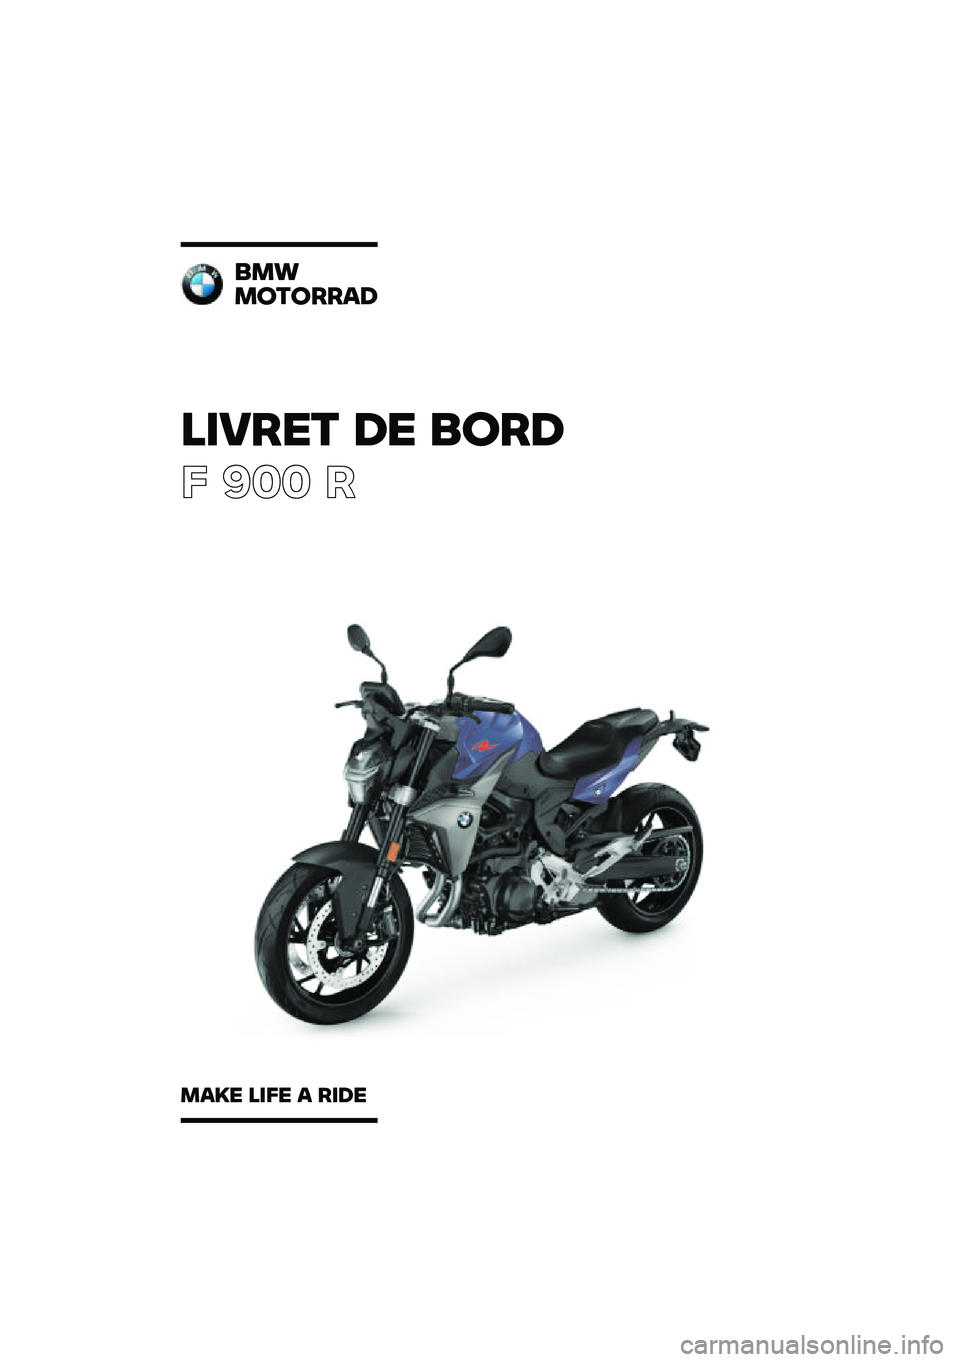 BMW MOTORRAD F 900 R 2020  Livret de bord (in French) ������ �\b� �	�
��\b
� ��� �
�	��\f
��
��
���
�\b
��
�� ���� �
 ���\b� 